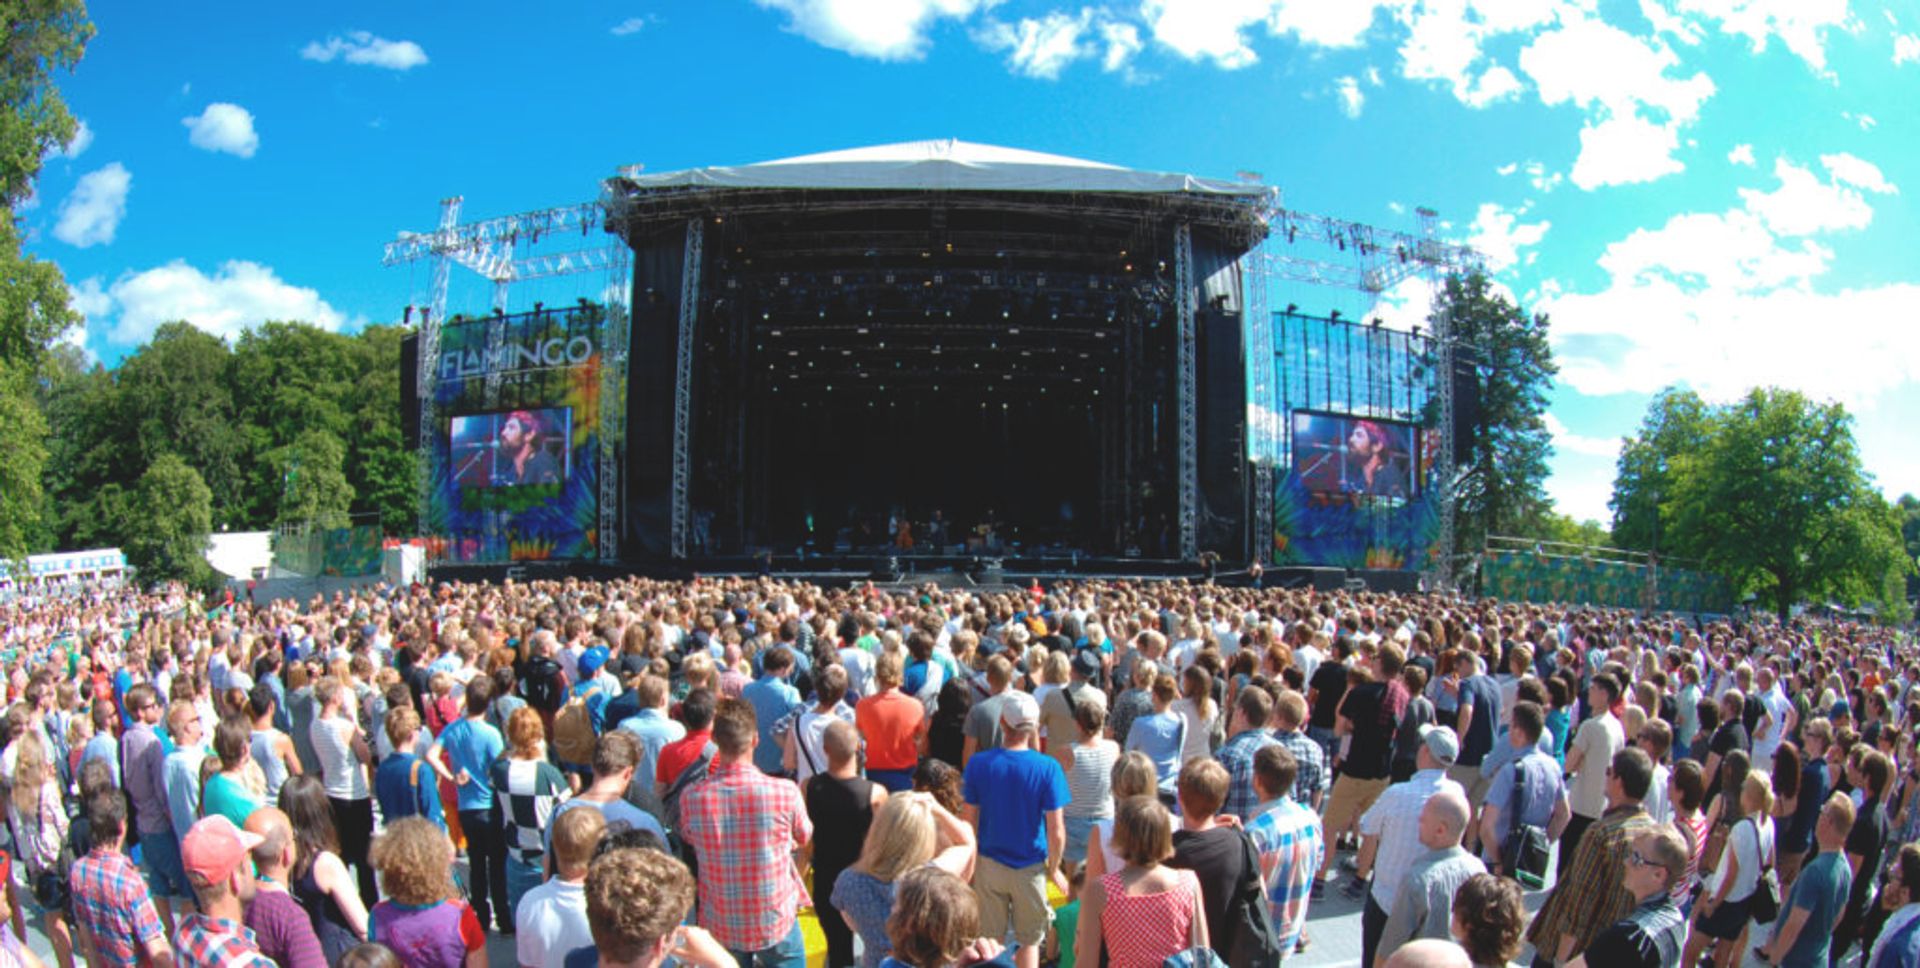 The vibrant city and its famous music festival (Source: Rodrigo Rivas Ruiz/imagebank.sweden.se)